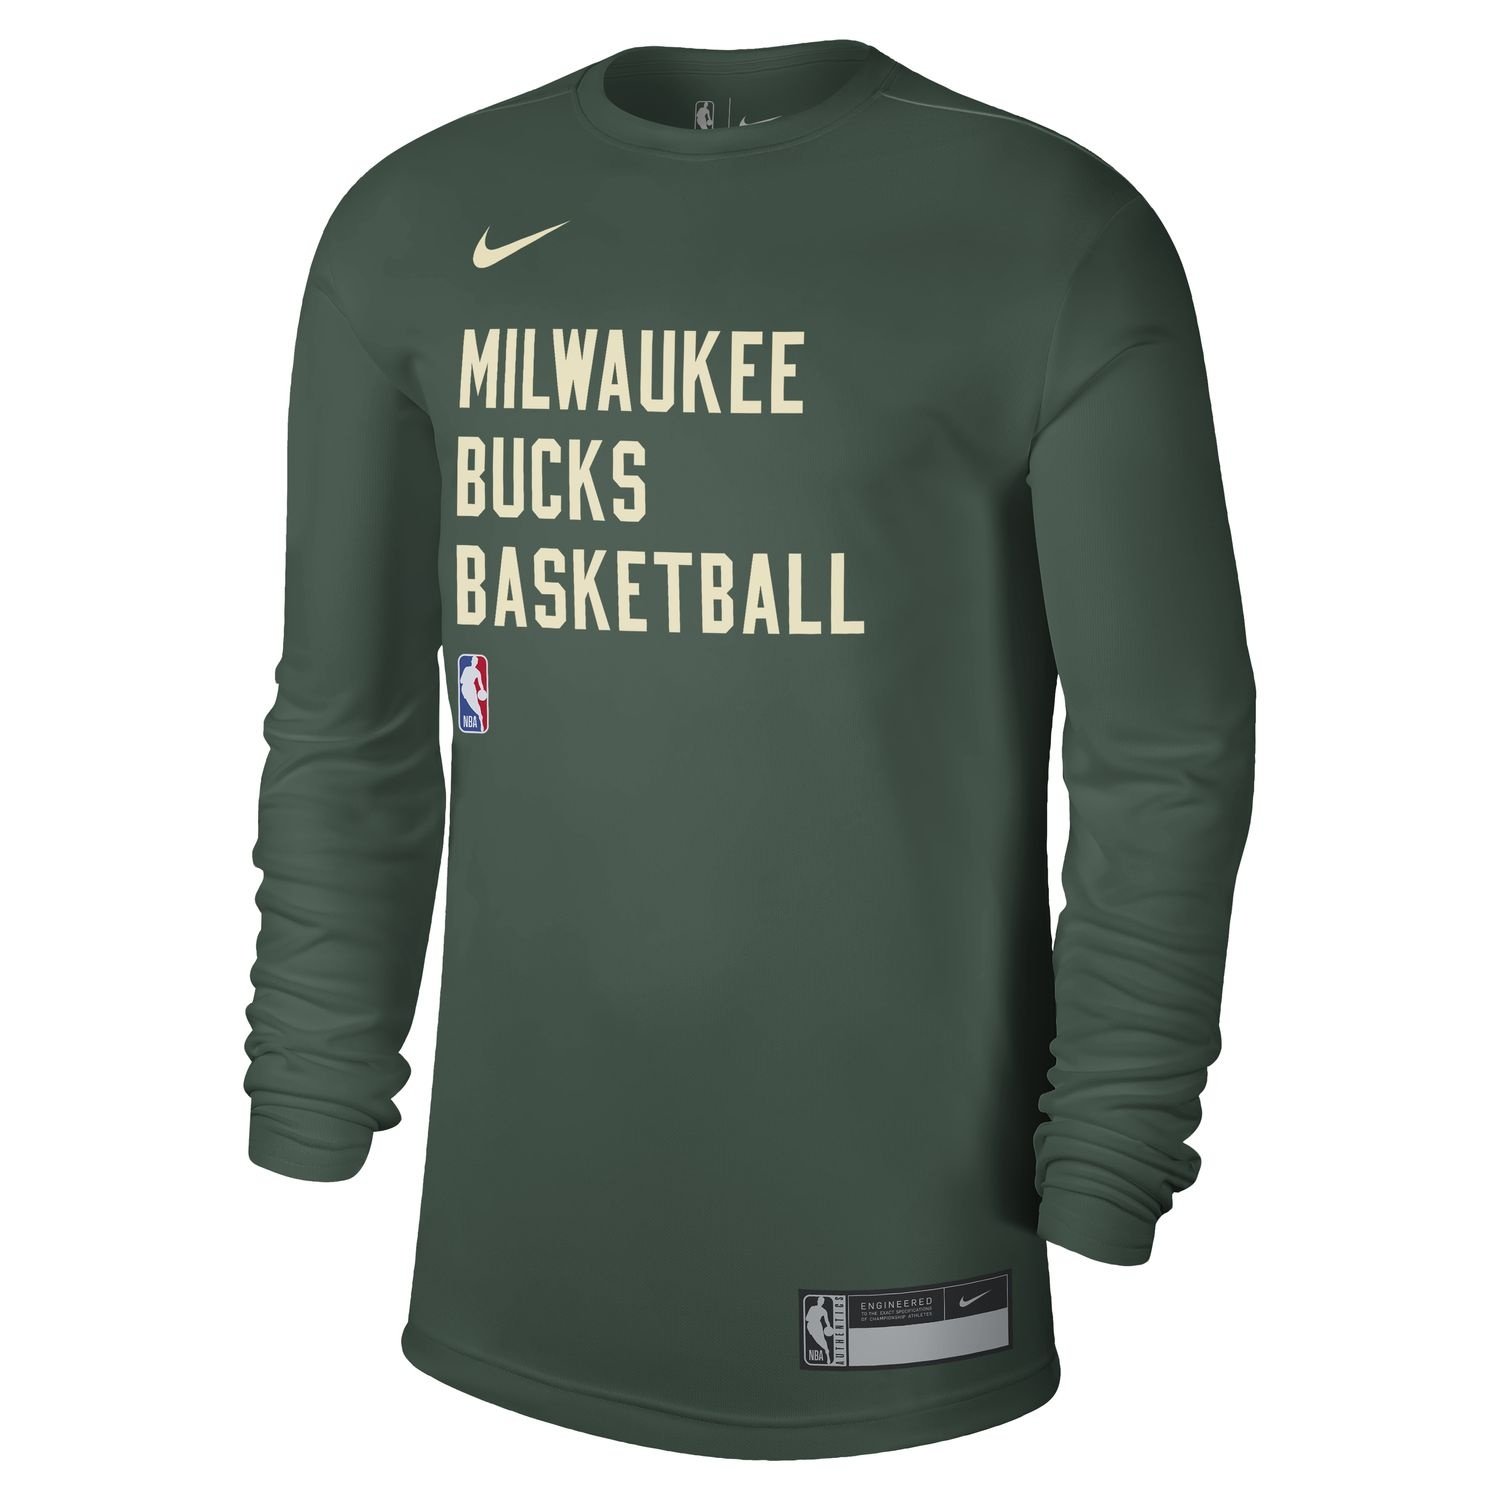 Authentic Milwaukee Bucks Jerseys at MODA3 - Free Shipping $100+ - MODA3